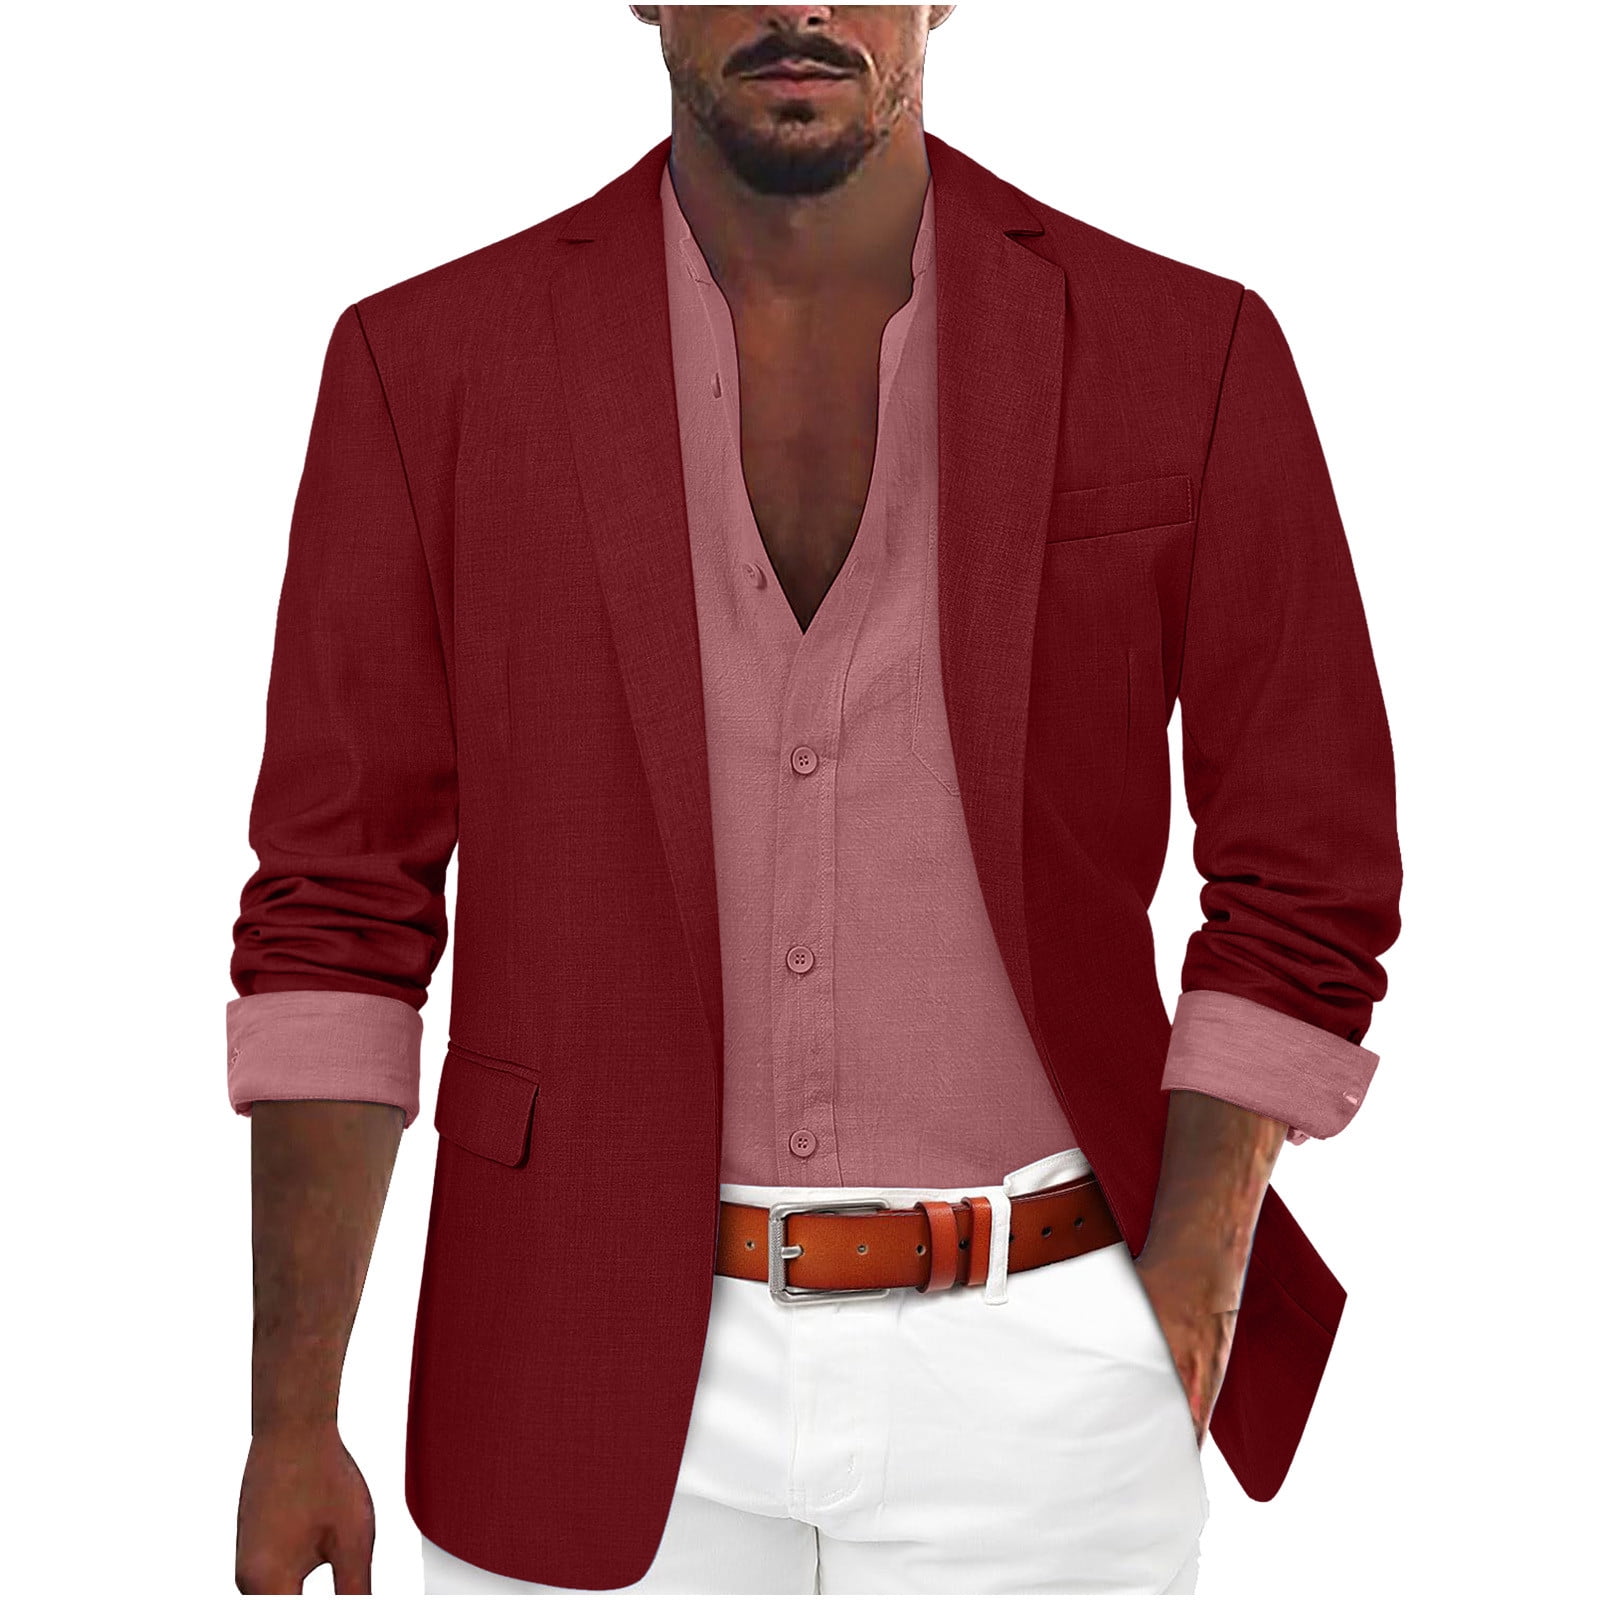 Sports Coats, Casual Jackets & Blazers for Men